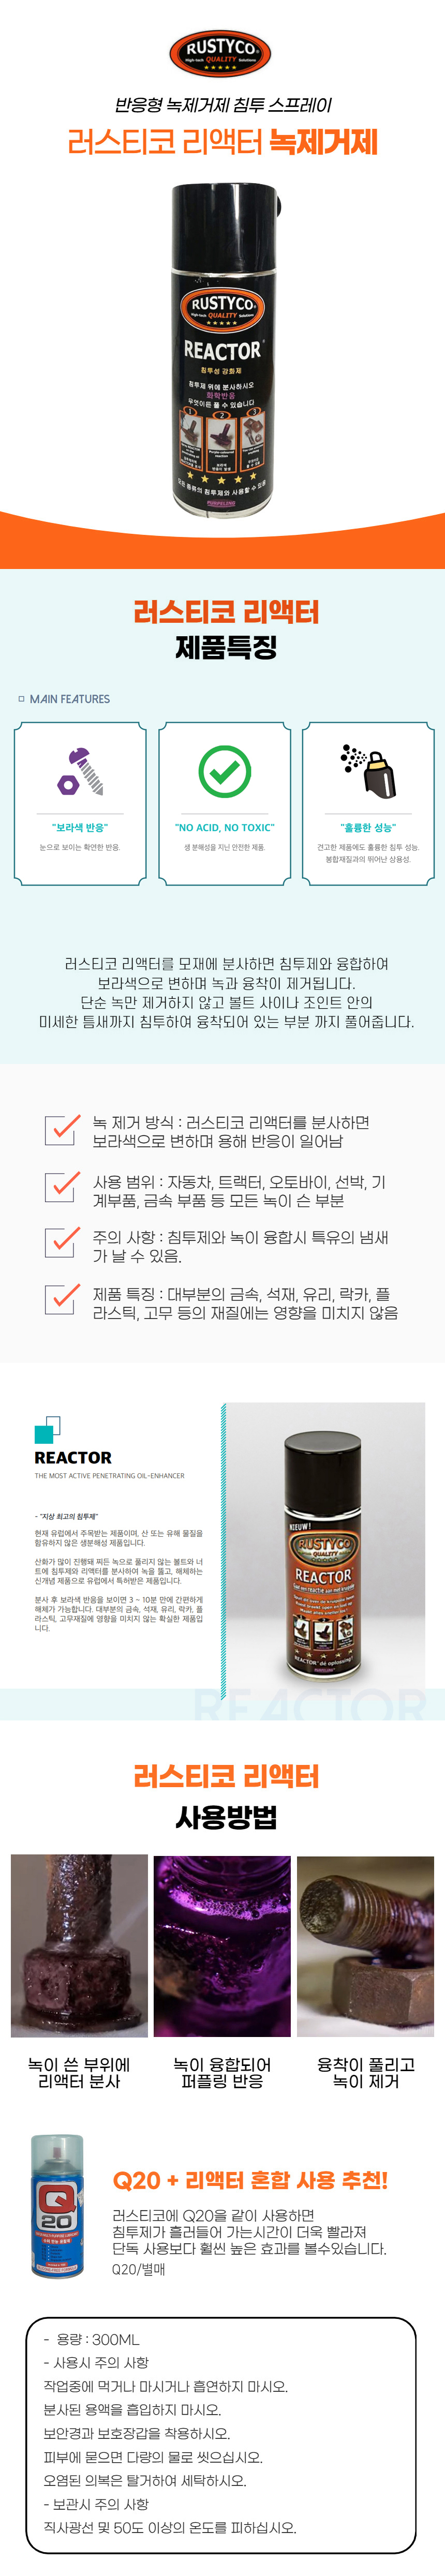 Reactor.jpg